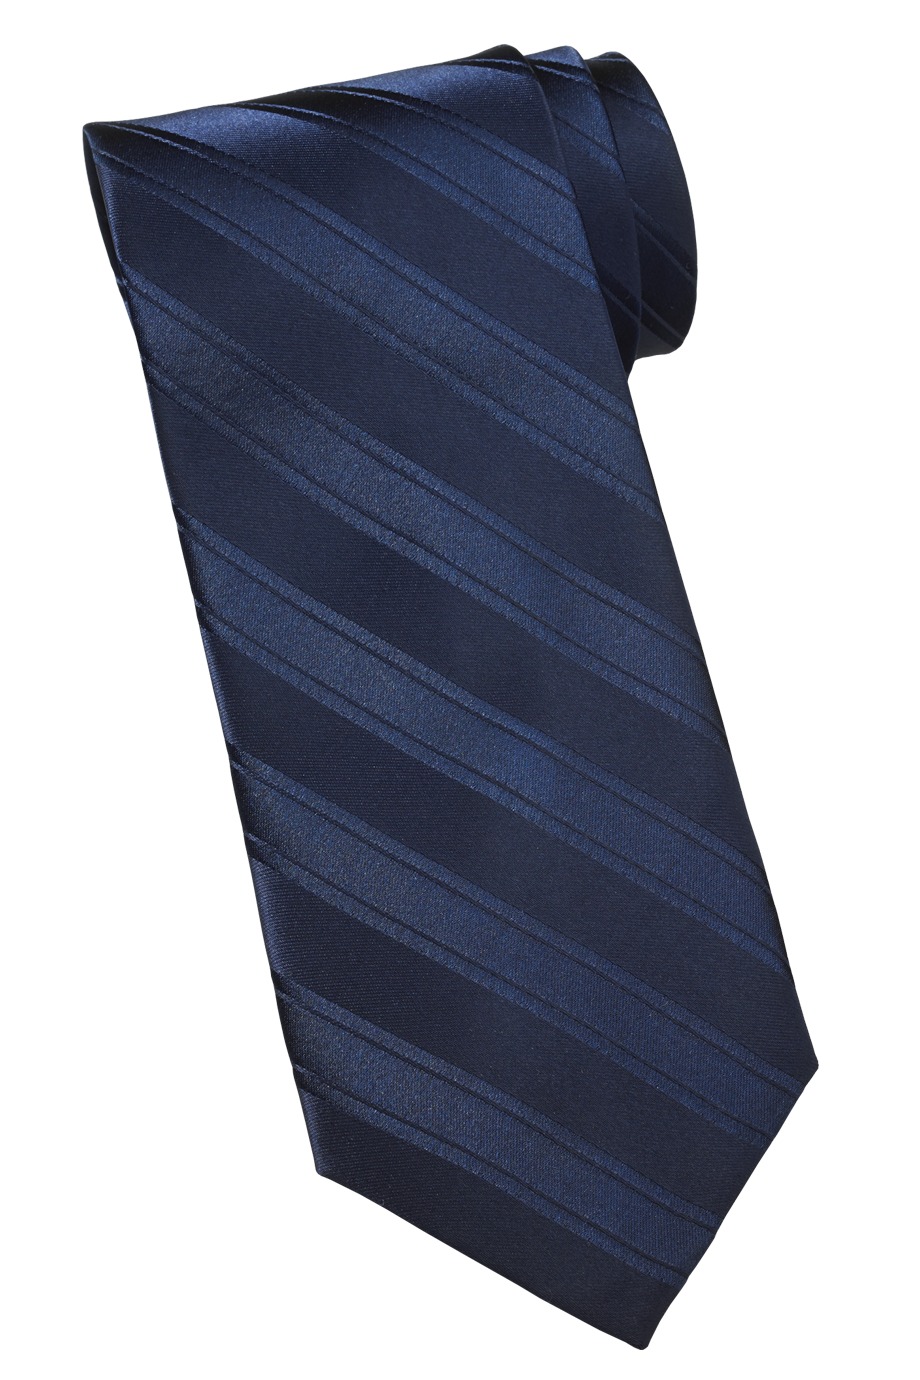 Edwards Garment TS00 - Tonal Stripe Tie